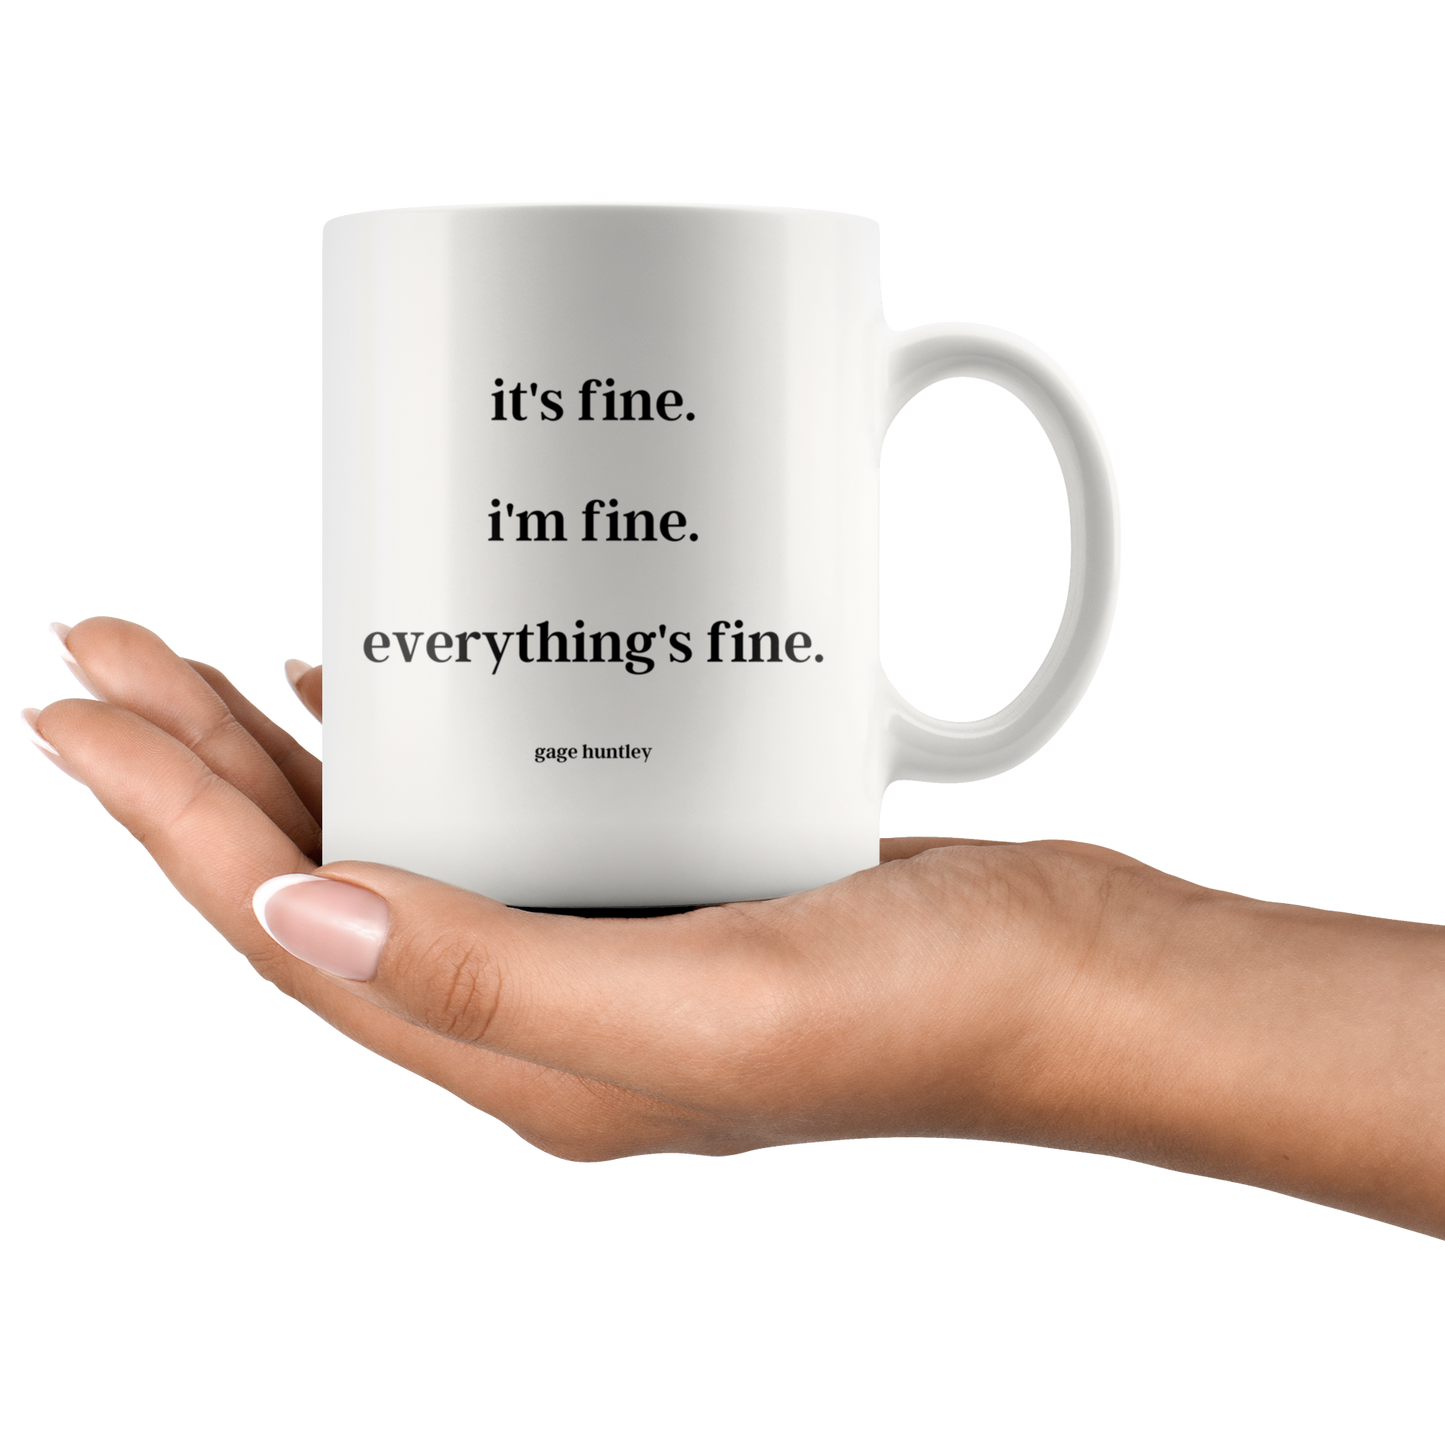 It's fine. I'm fine. Everything's fine. - Coffee Mug